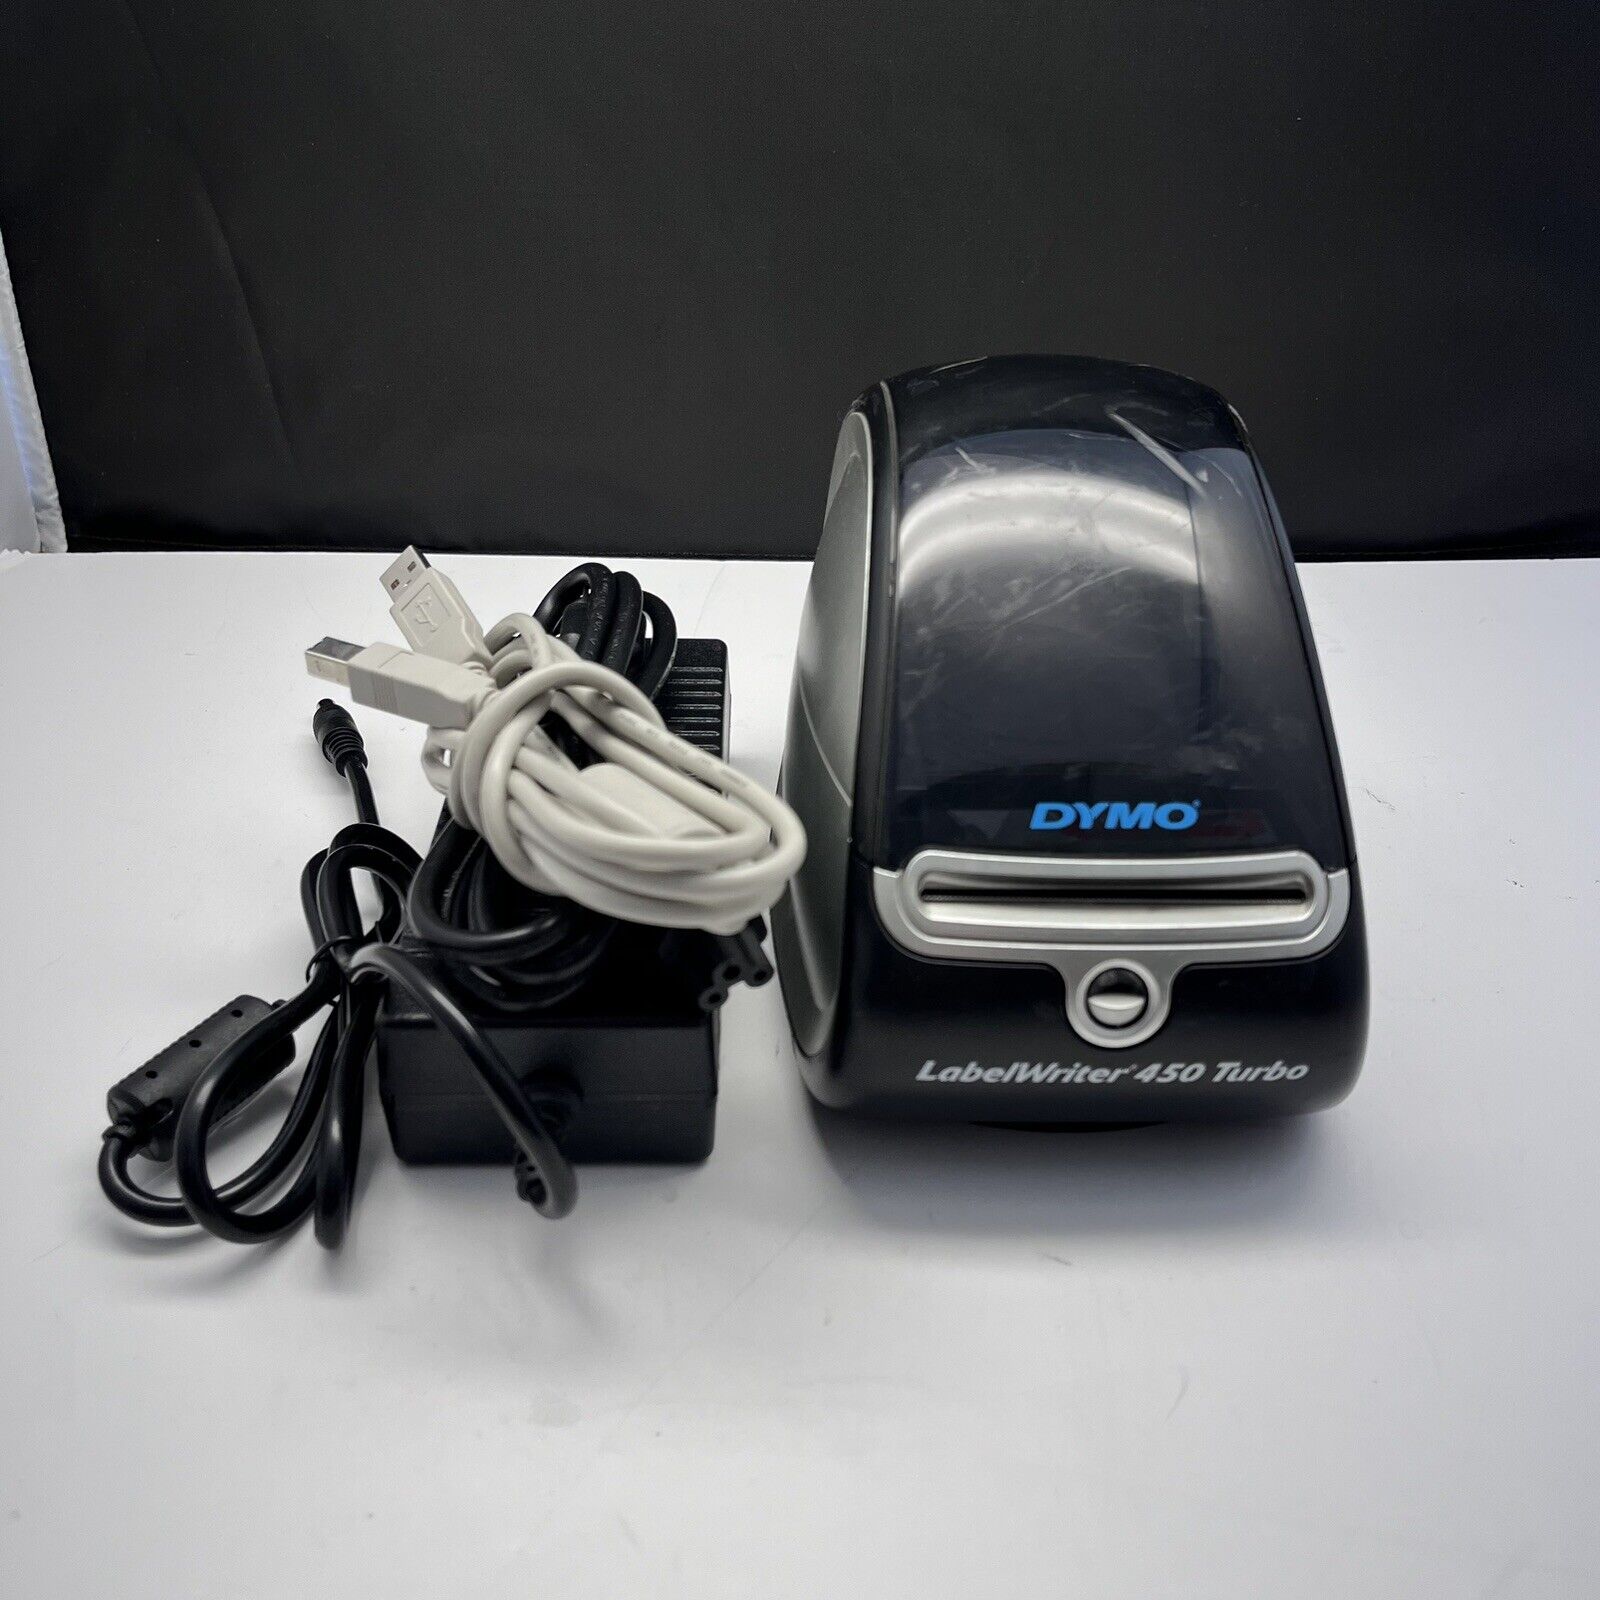 Dymo LabelWriter 450 Turbo 1750283 Thermal Label Printer USB